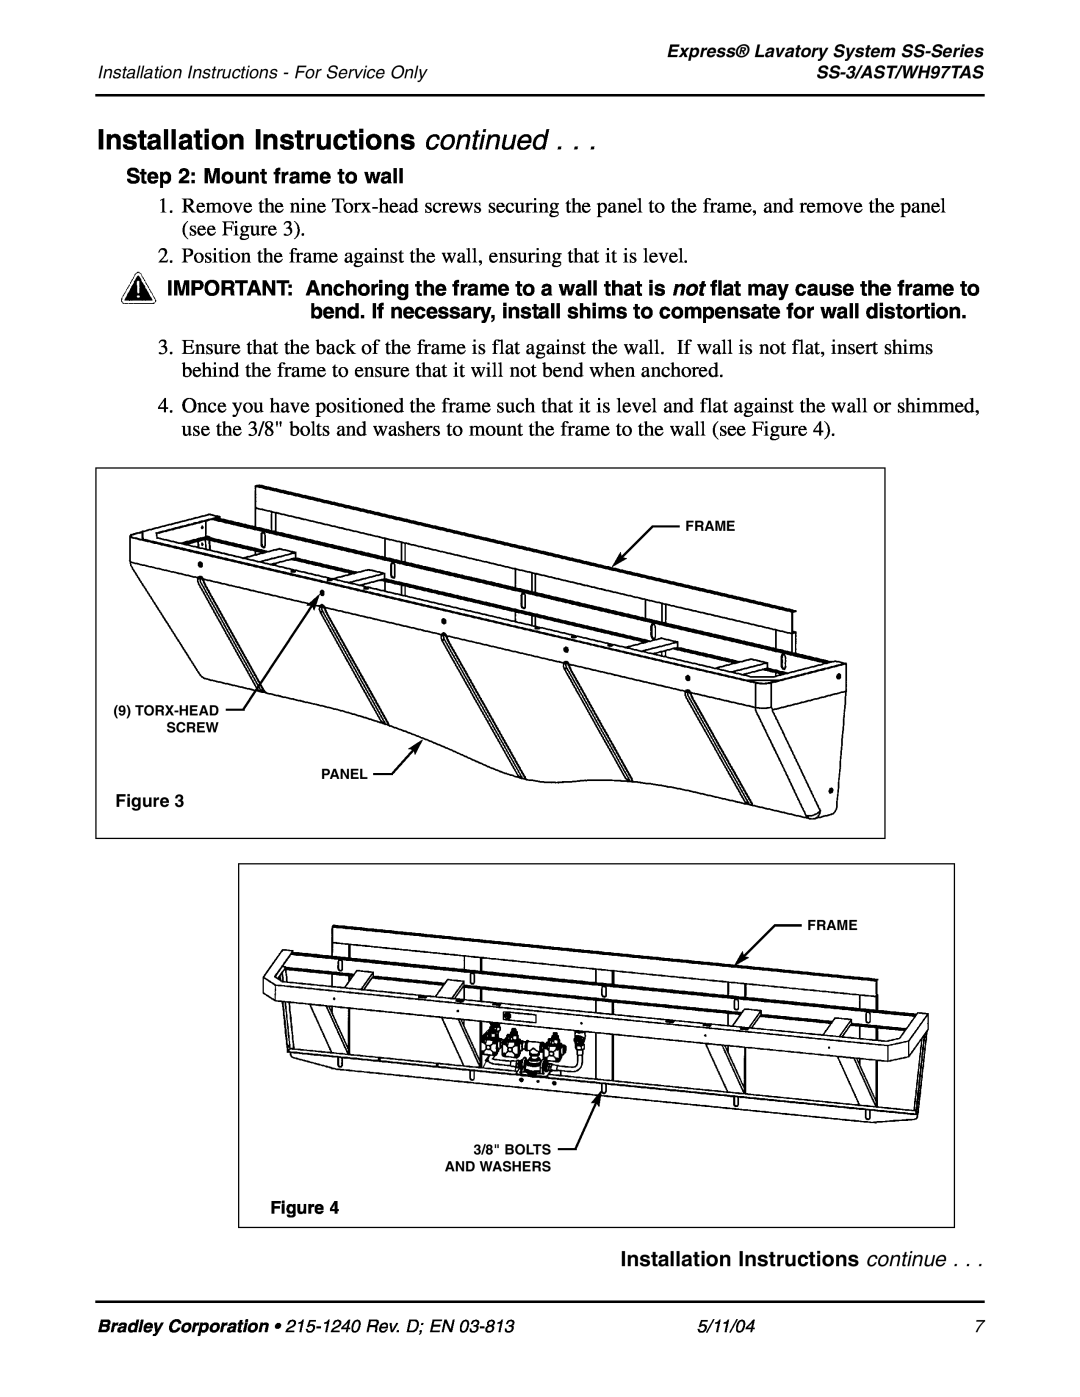 Bradley Smoker SS-3 installation instructions Installation Instructions continued, Mount frame to wall 